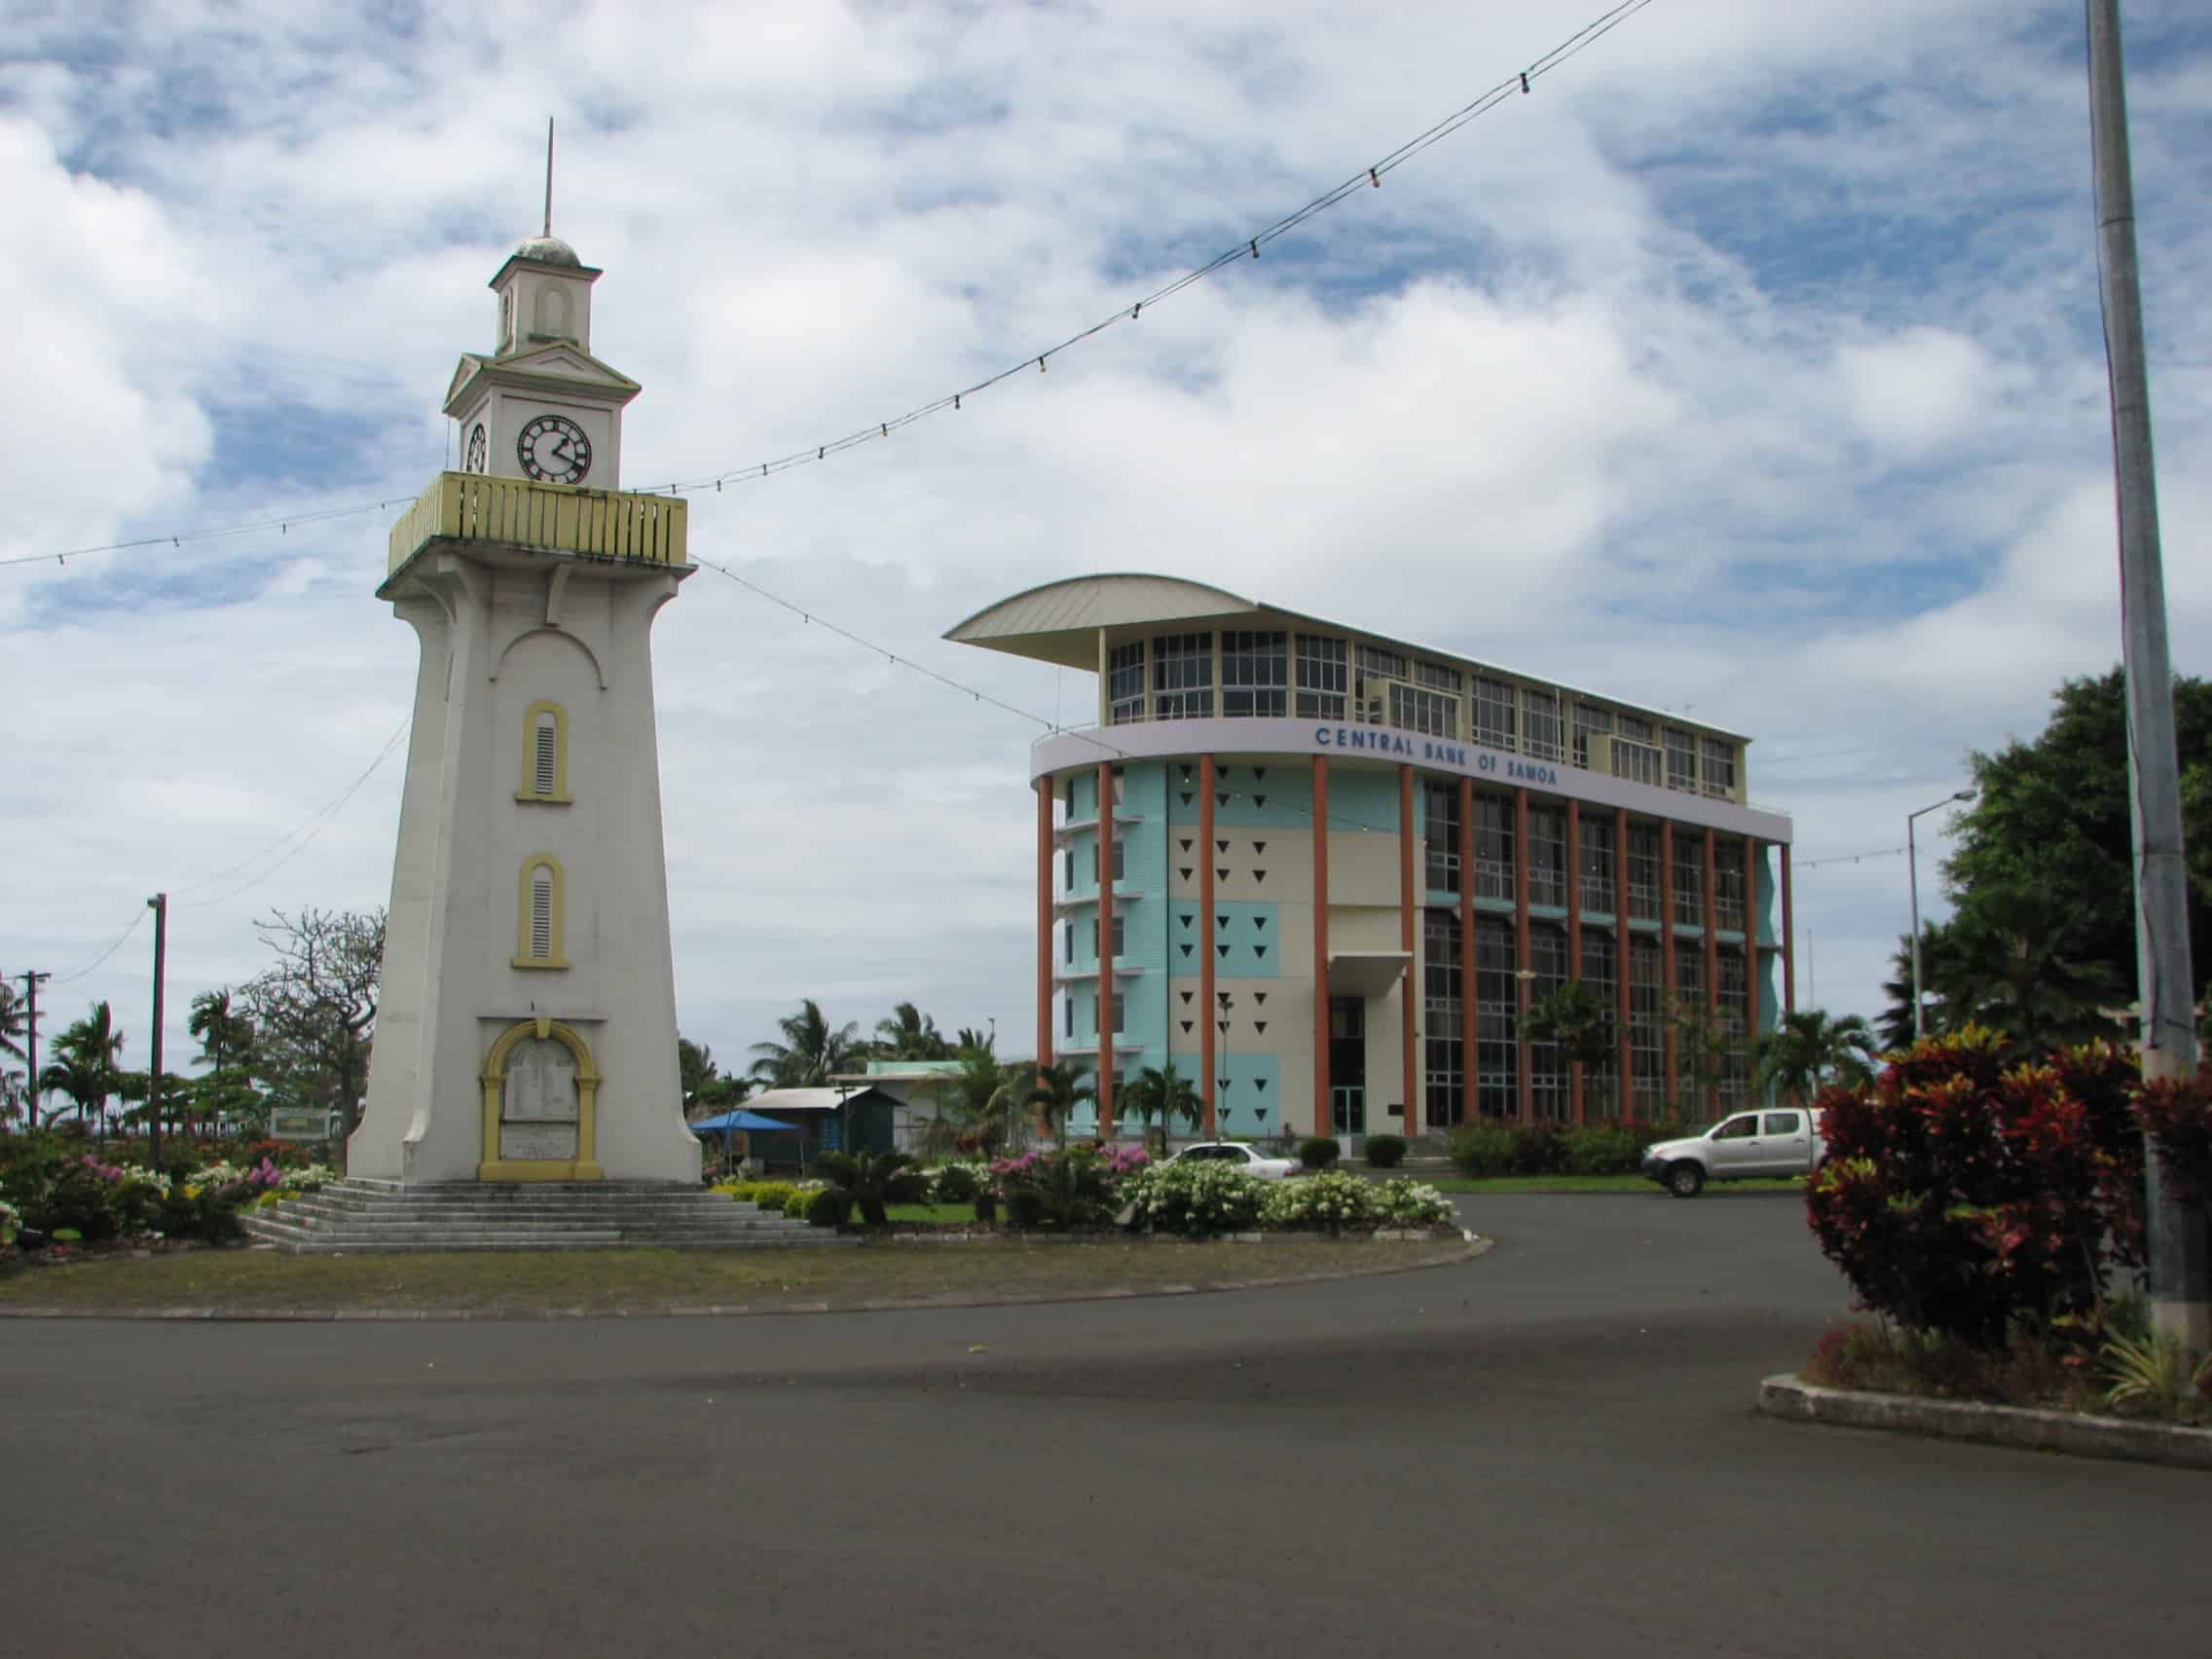 Central bank of Samoa